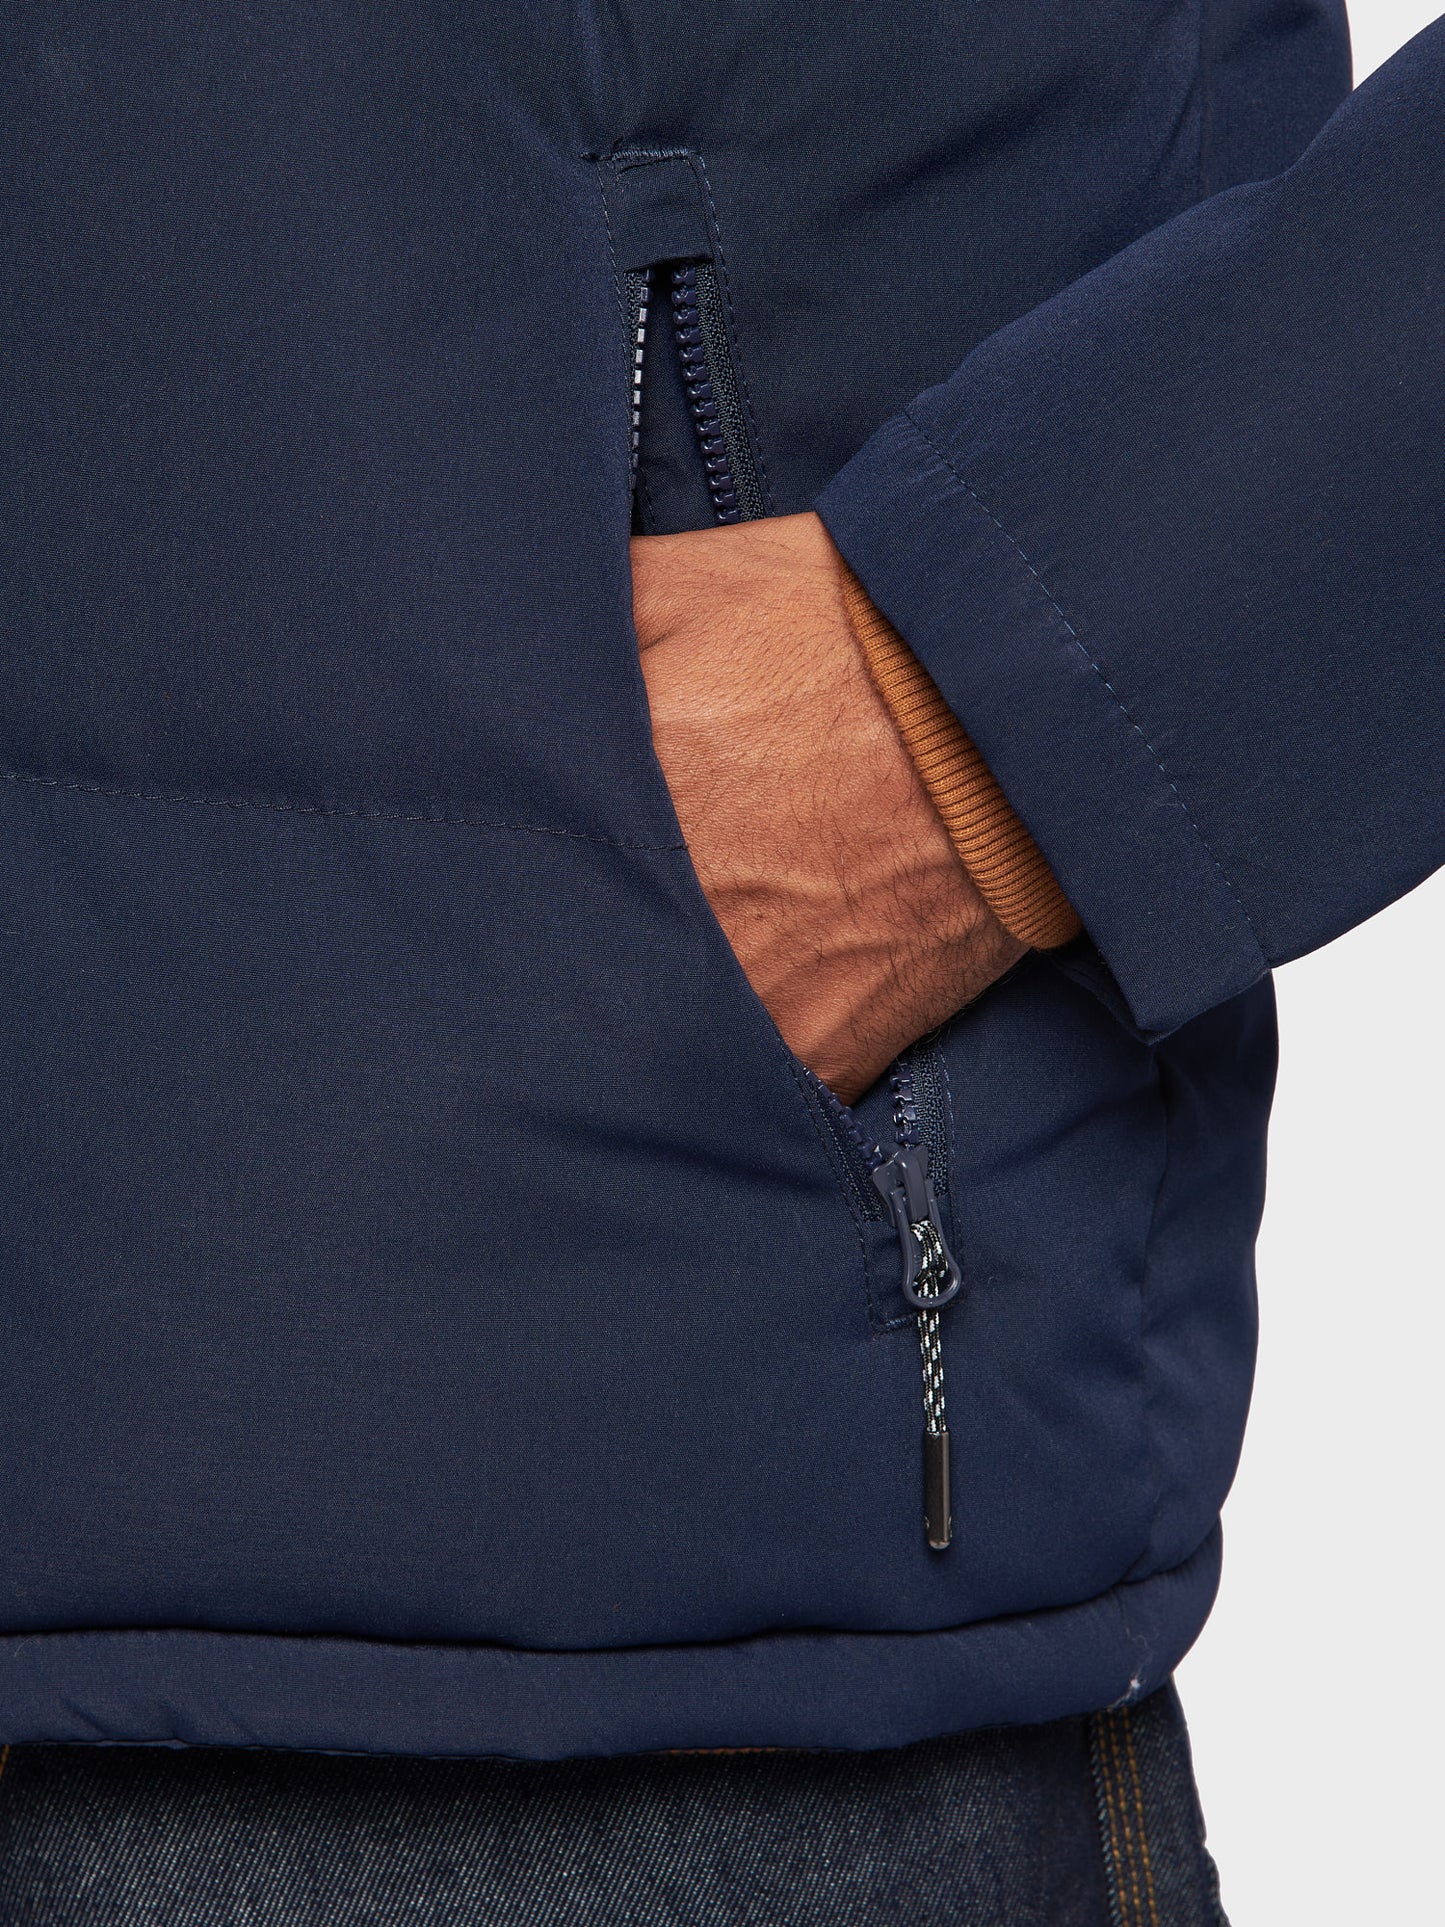 P Bear Cut + Sew Funnel Neck Puffer Jacket in Navy Blue